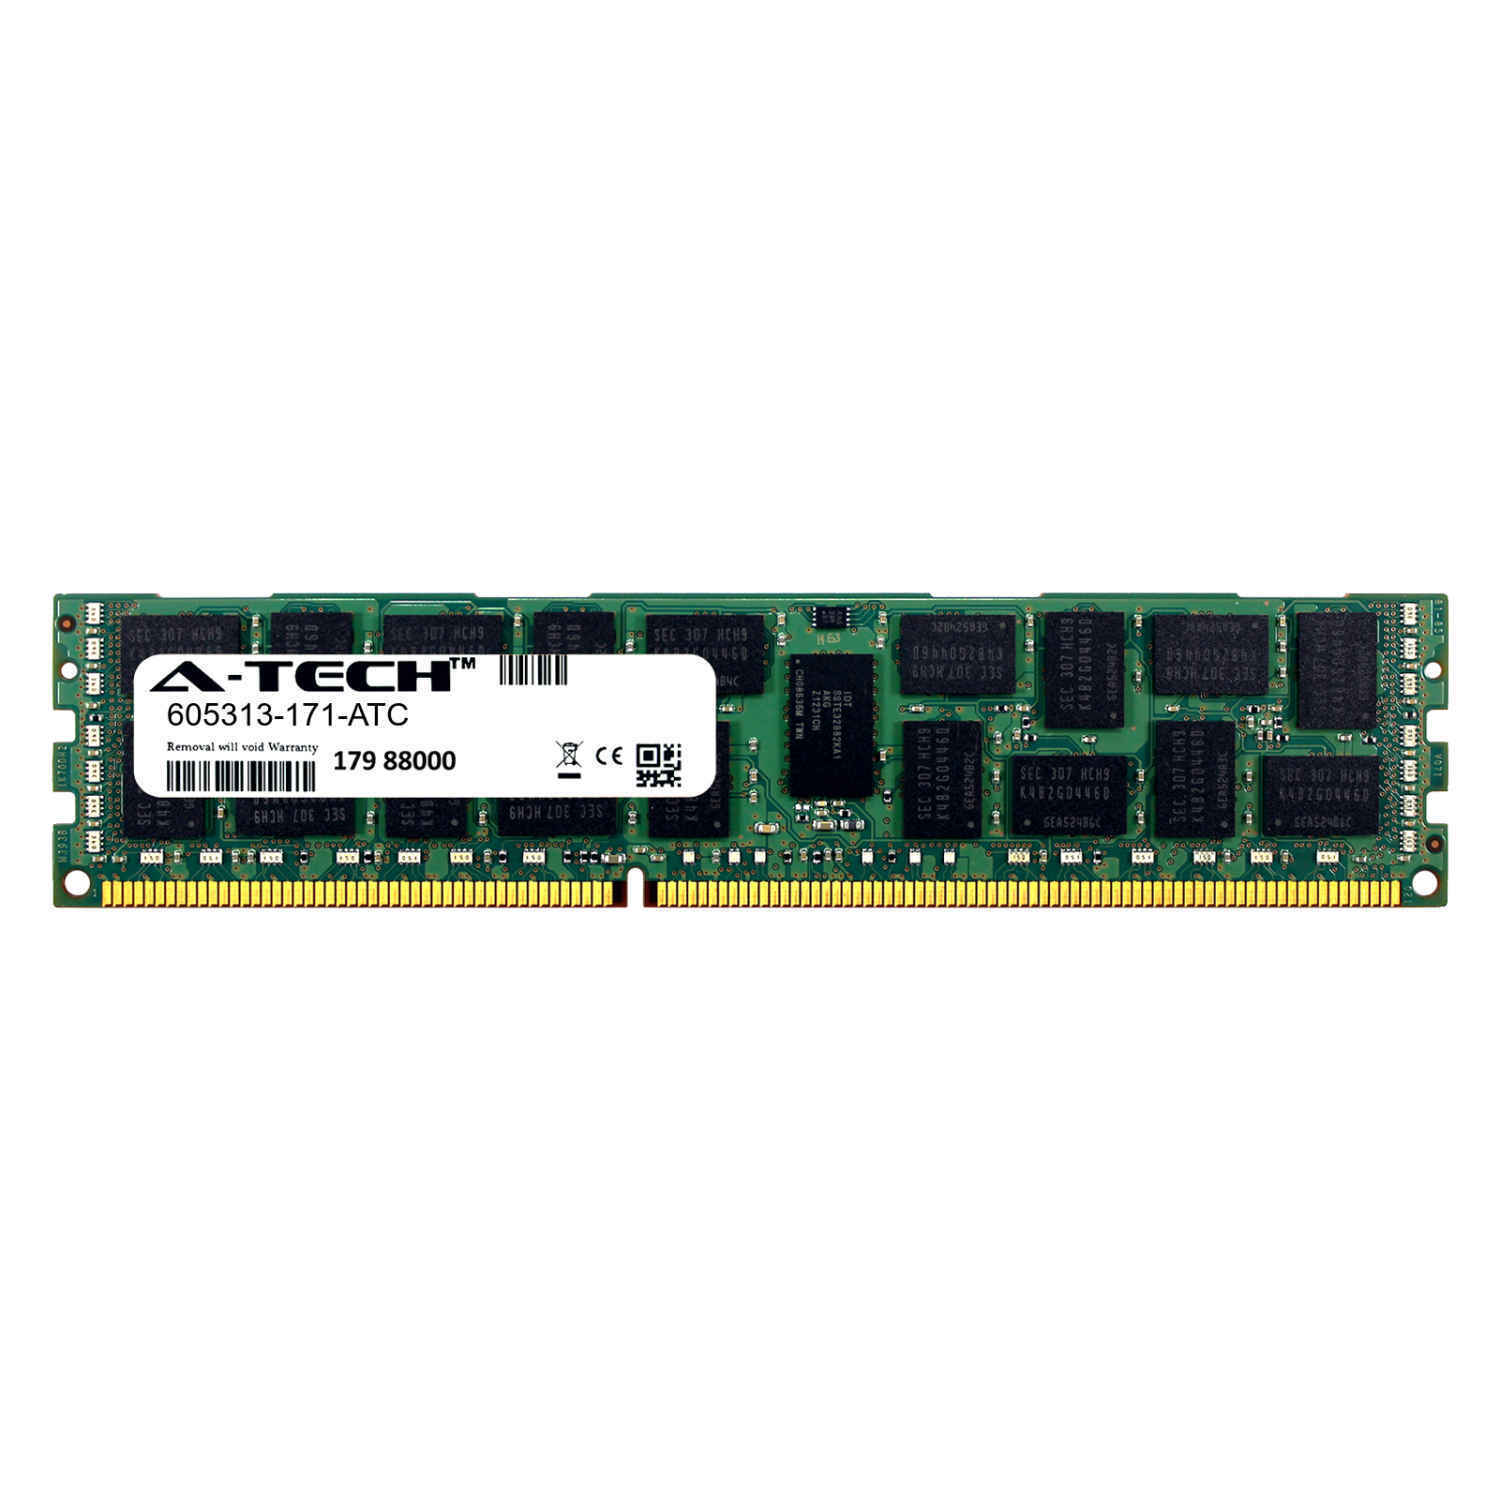 8GB DDR3 PC3-10600R 1333MHz RDIMM (HP 605313-171 Equivalent) Server Memory RAM